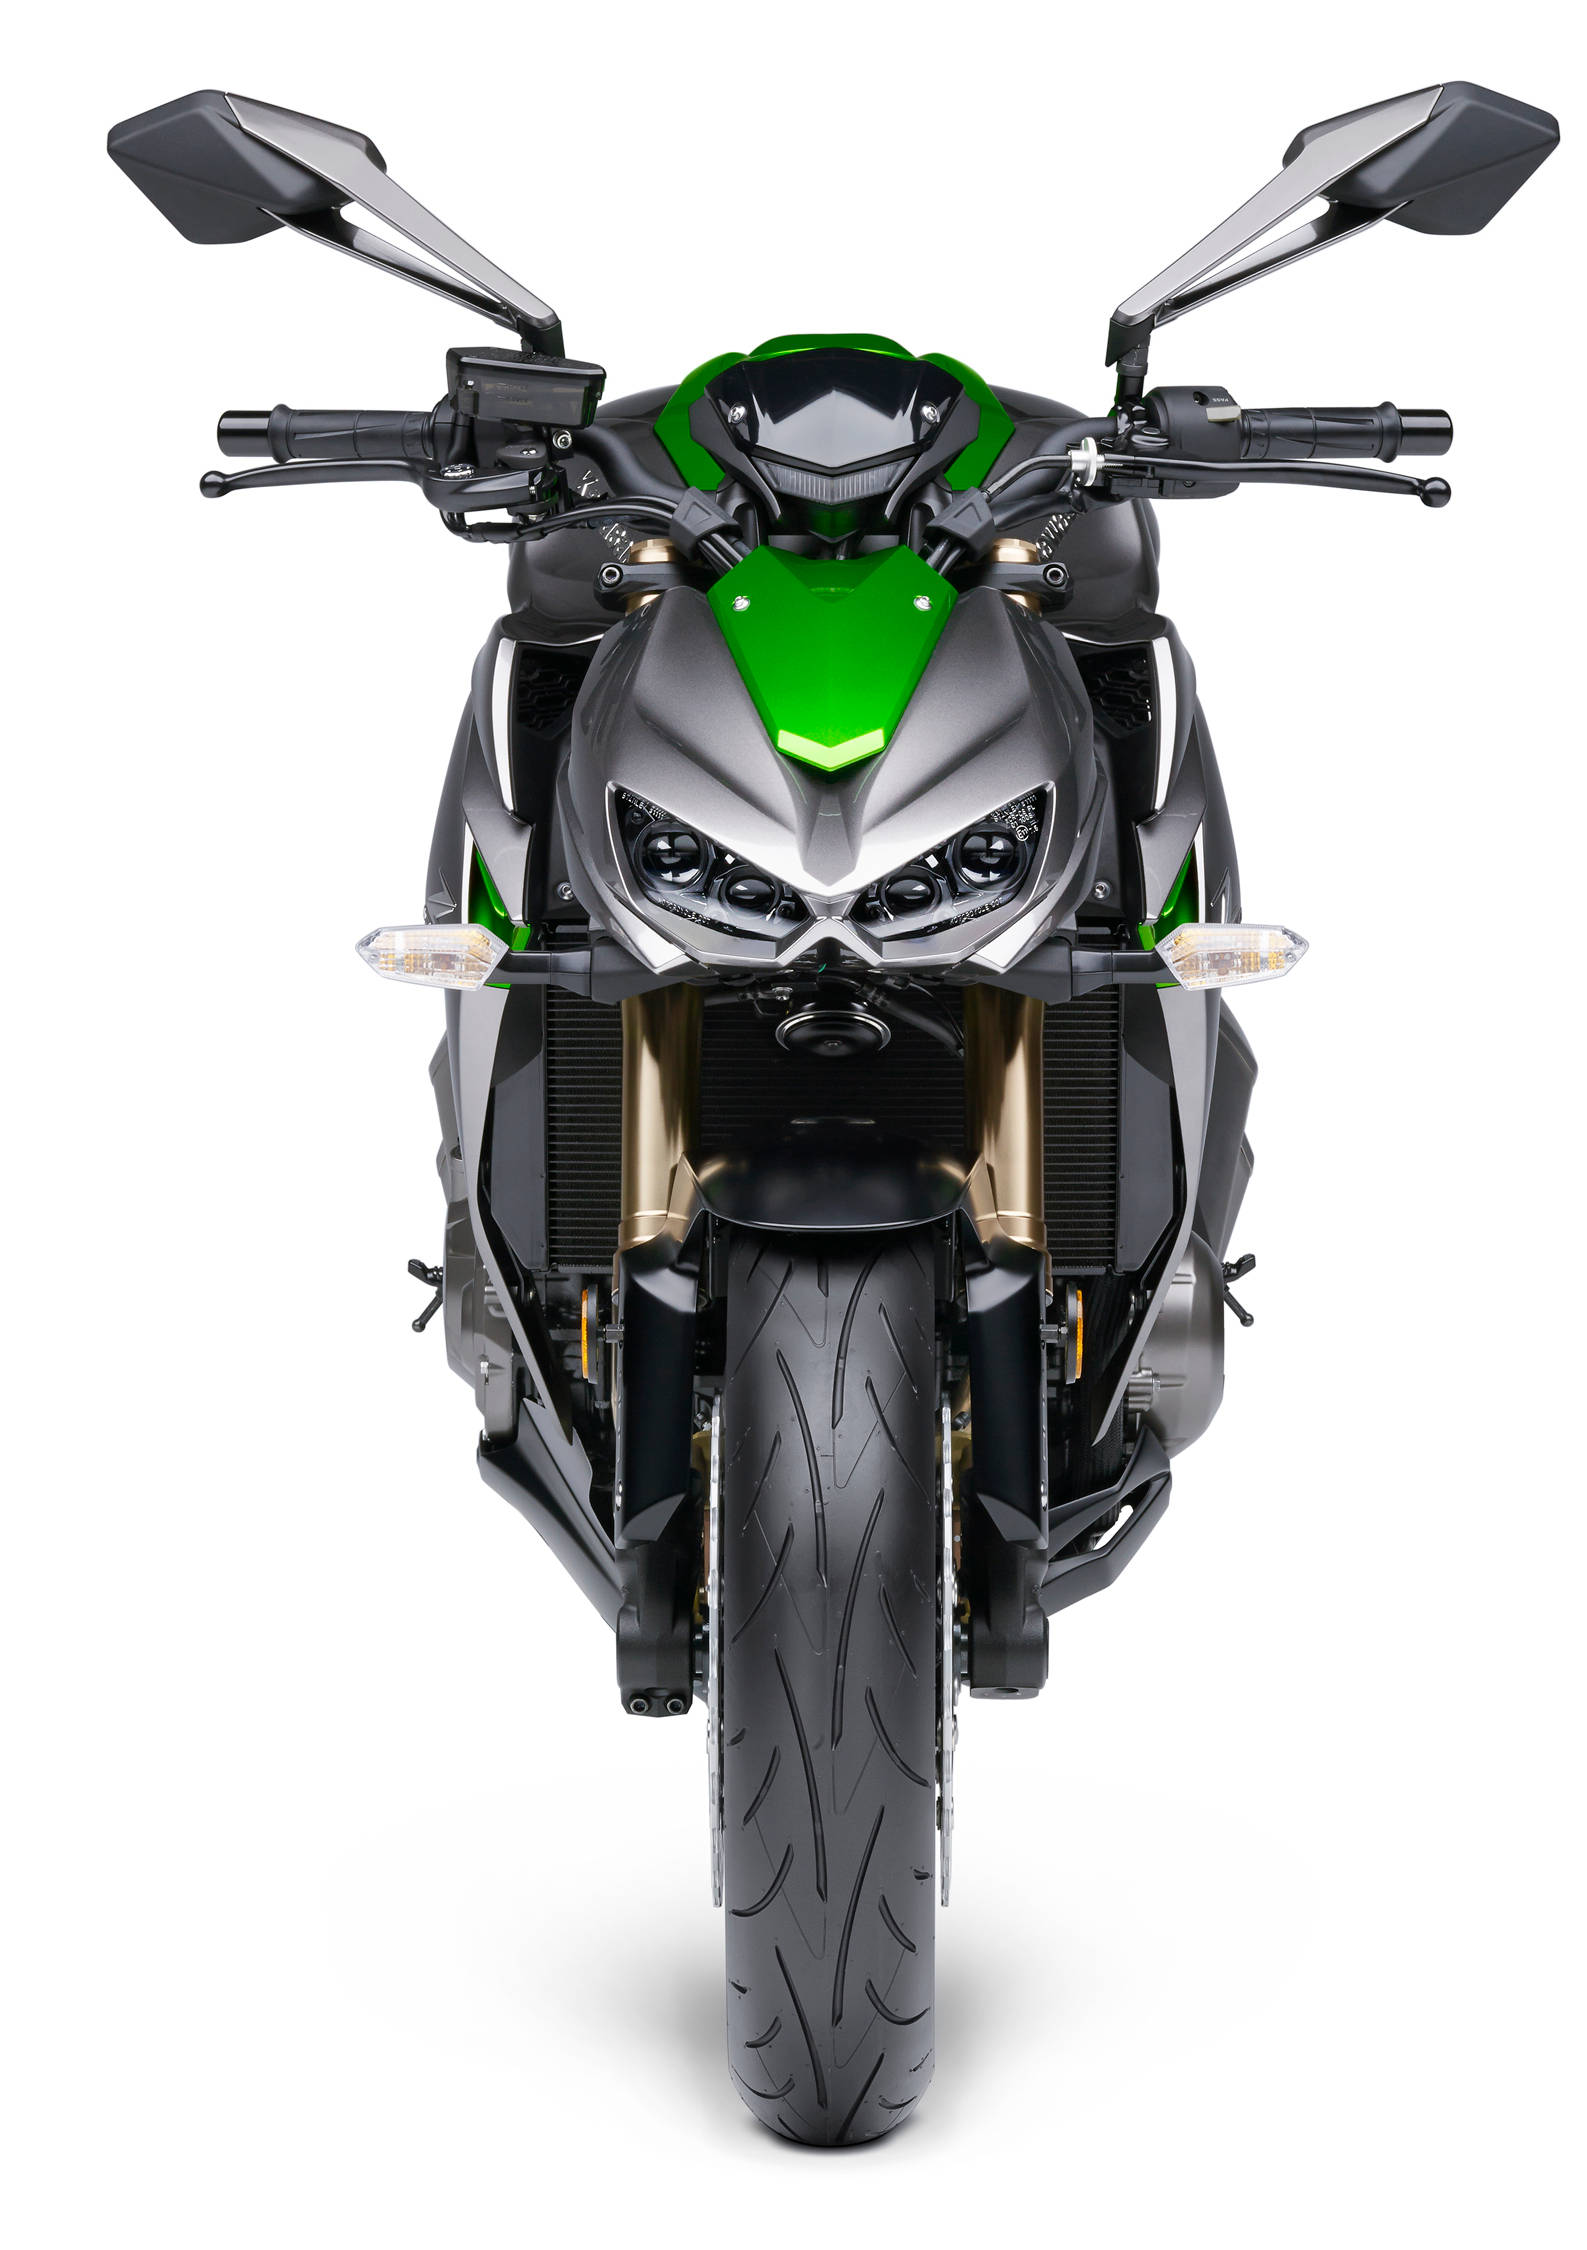 Kawasaki Z1000 Special Edition 2014 #8